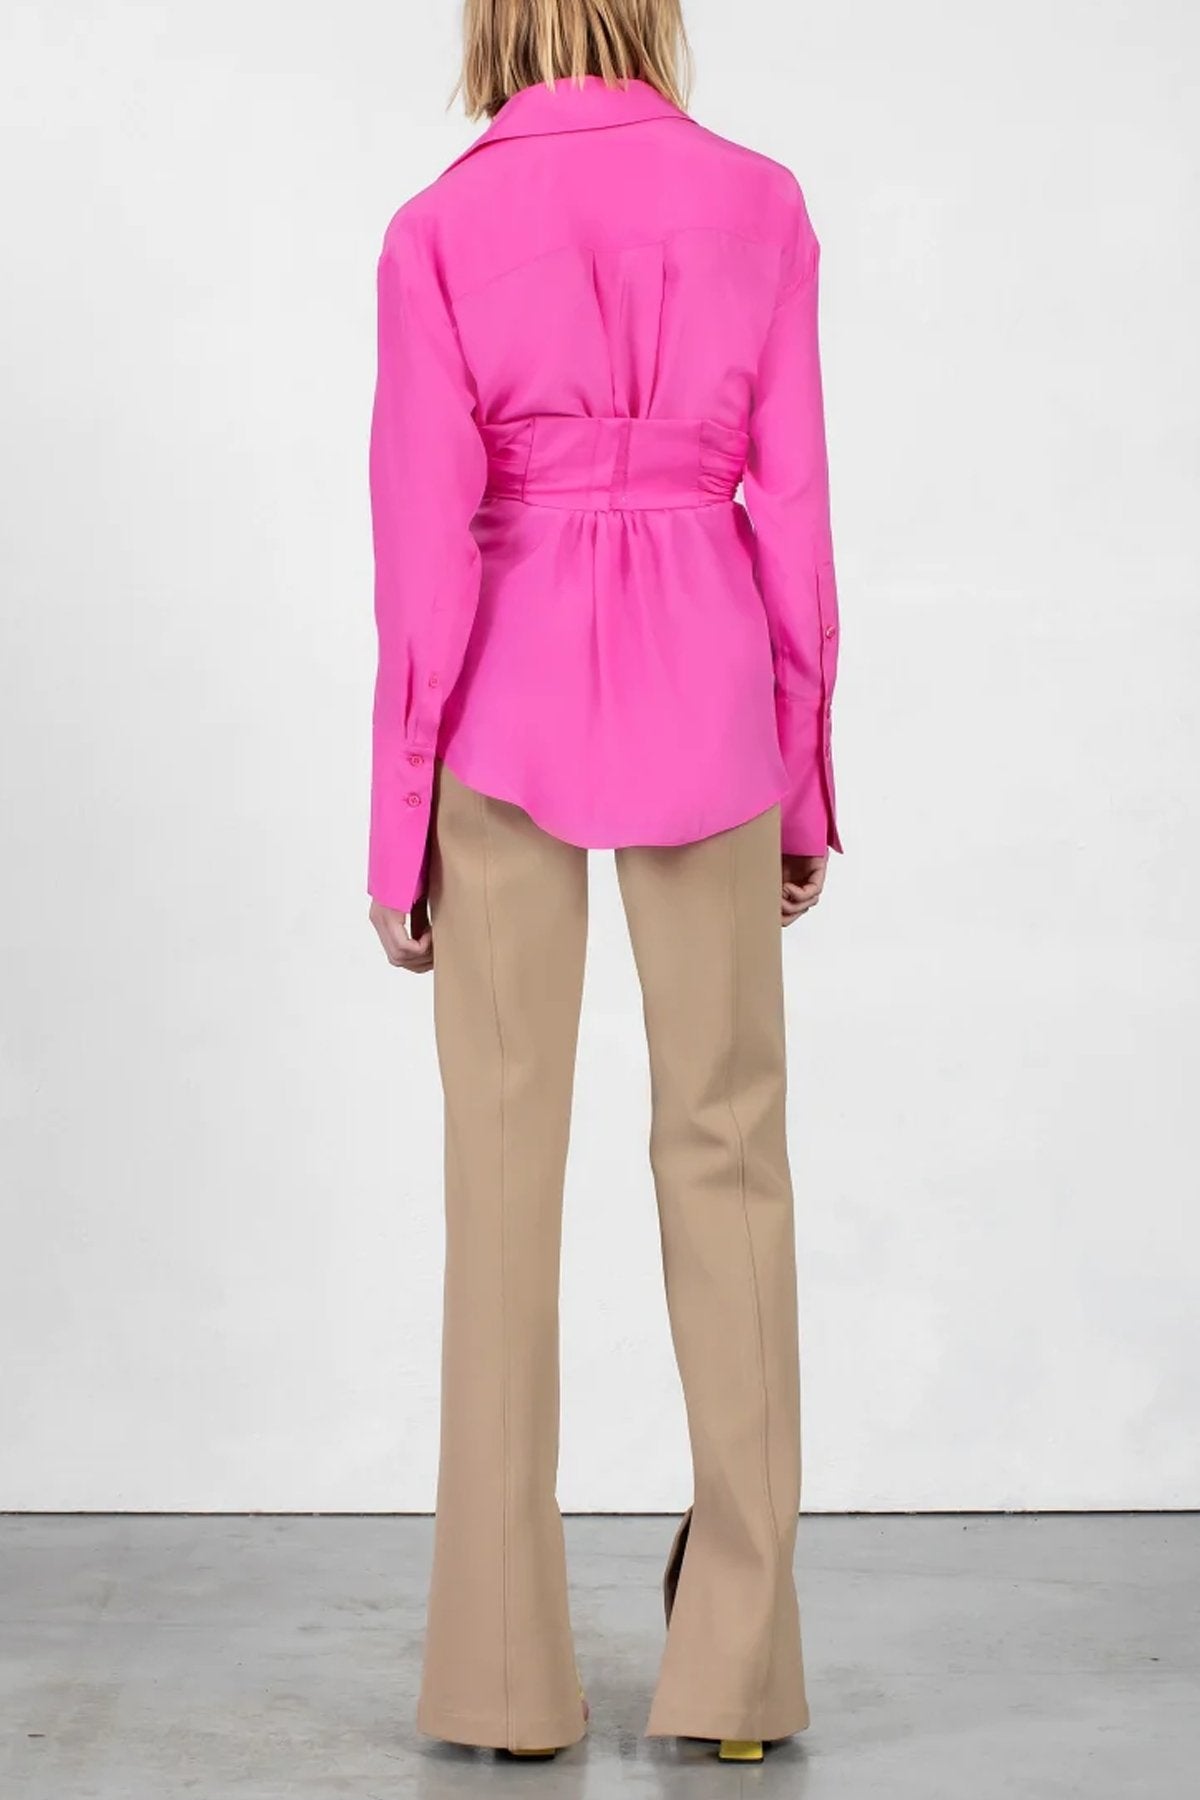 Sabinas Silk Shirt in Hot Pink - shop-olivia.com